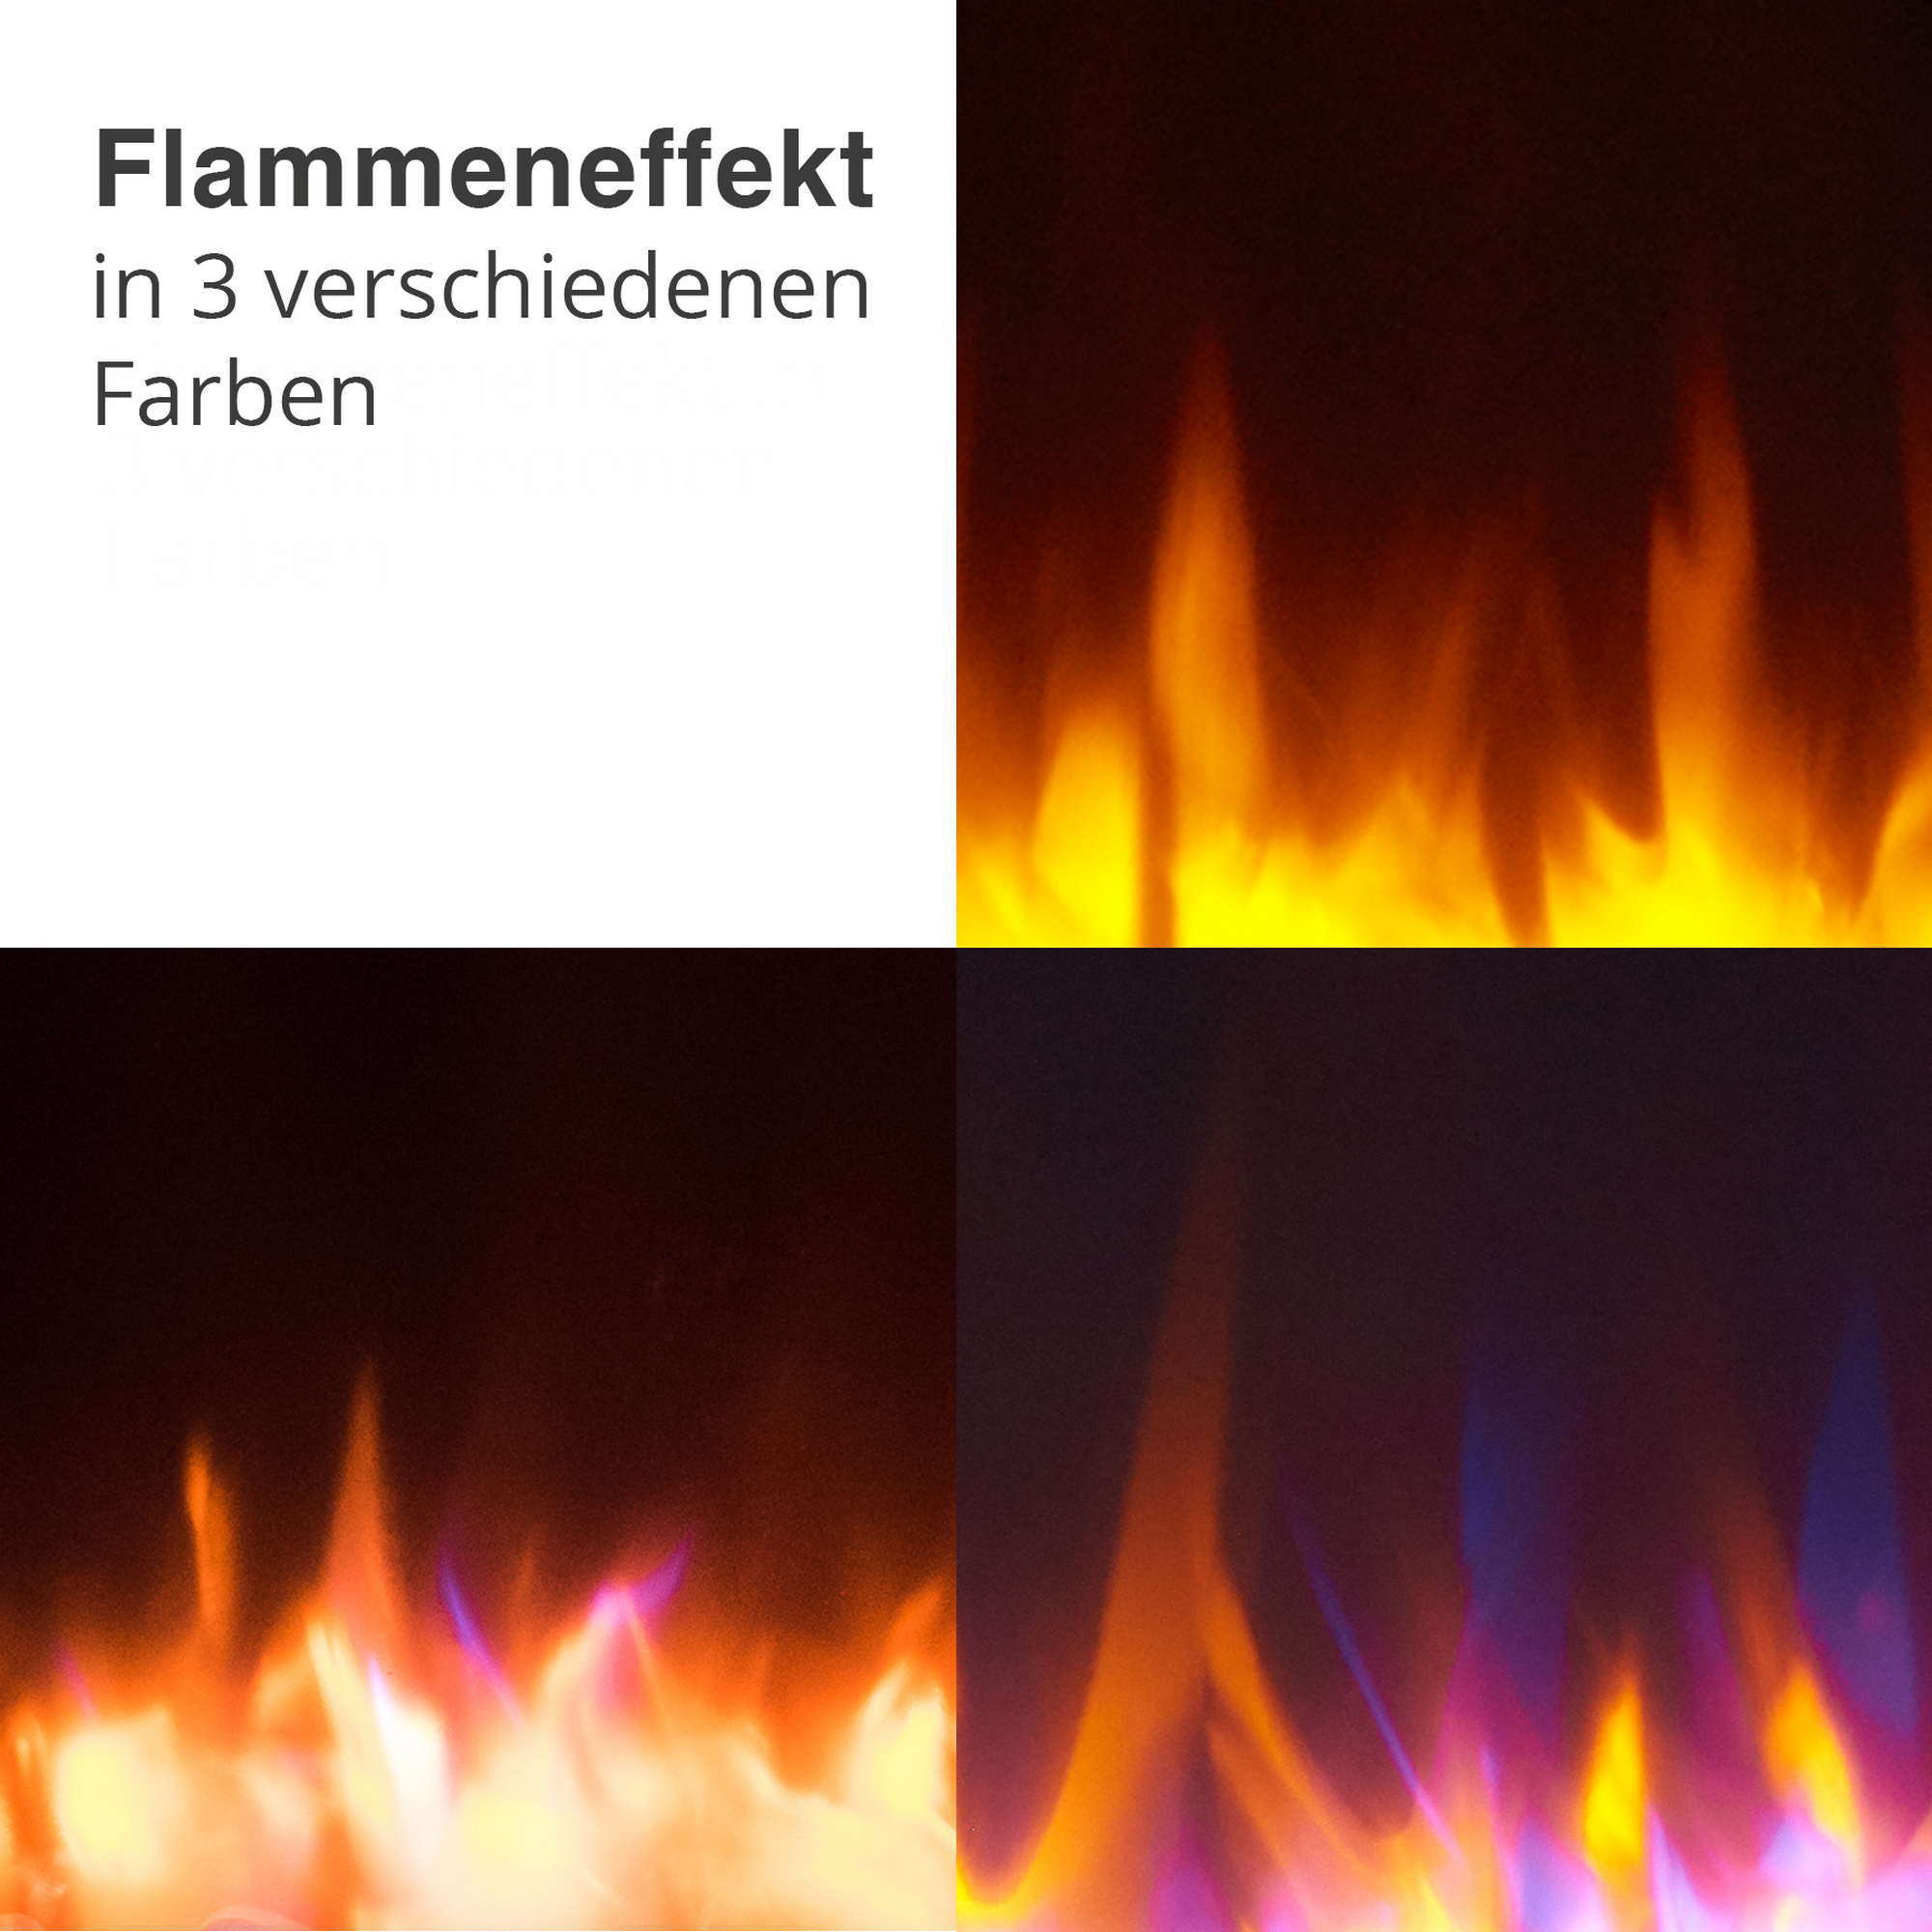 Elektro-Wandkamin 'Yoash' weiß 2000 W, 3D-Flammeneffekt Fernbedienung 128 x 55 x 13,9 cm + product picture